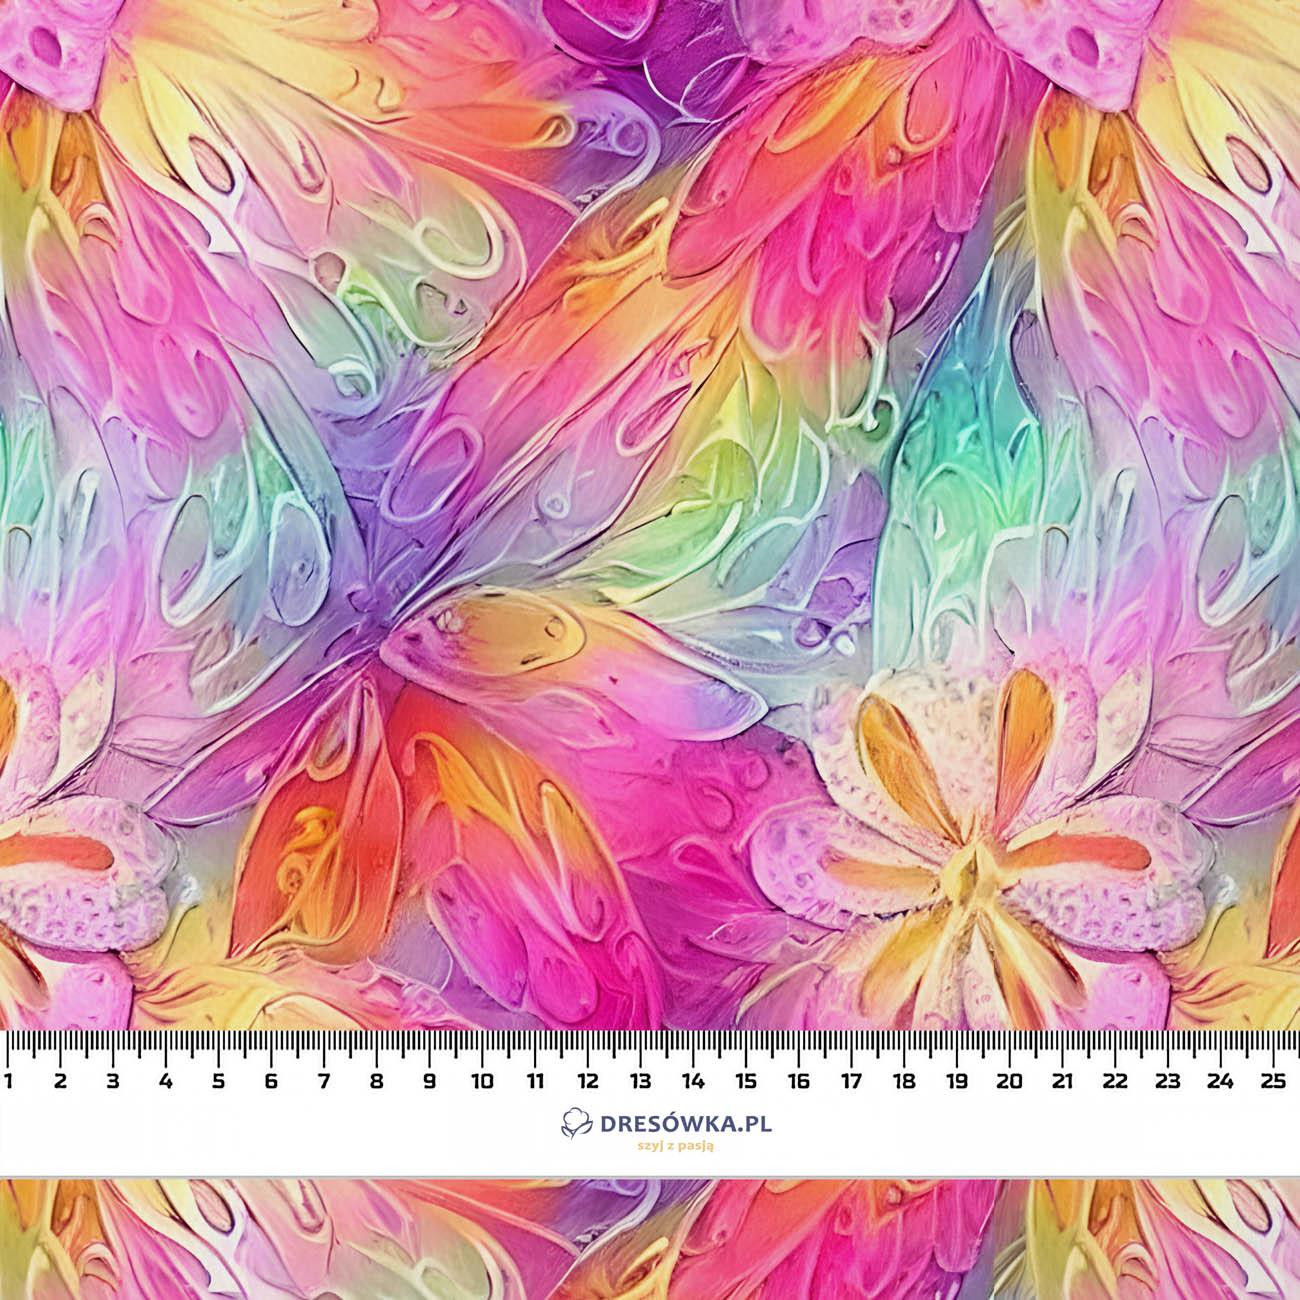 RAINBOW FLOWERS  - Cotton woven fabric